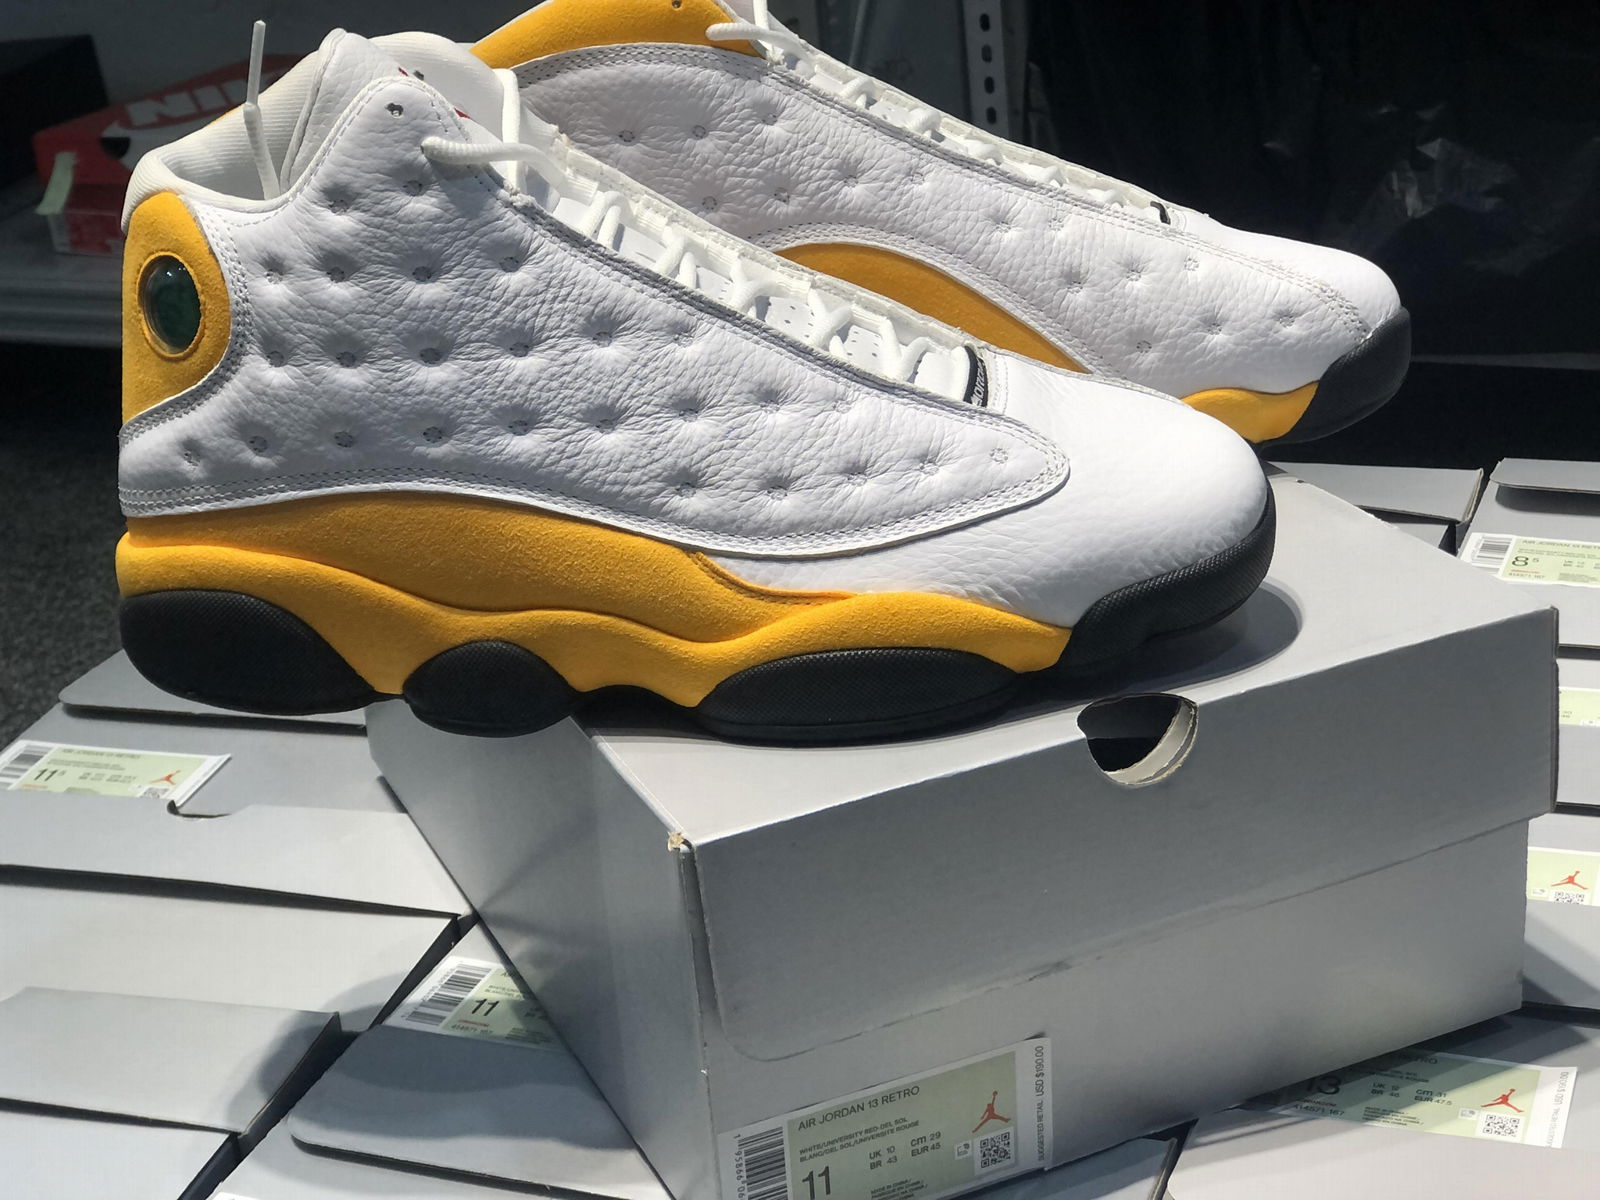 Del Sol "13 generation Lemon Yellow Aj13 new color matching basketball shoes 4